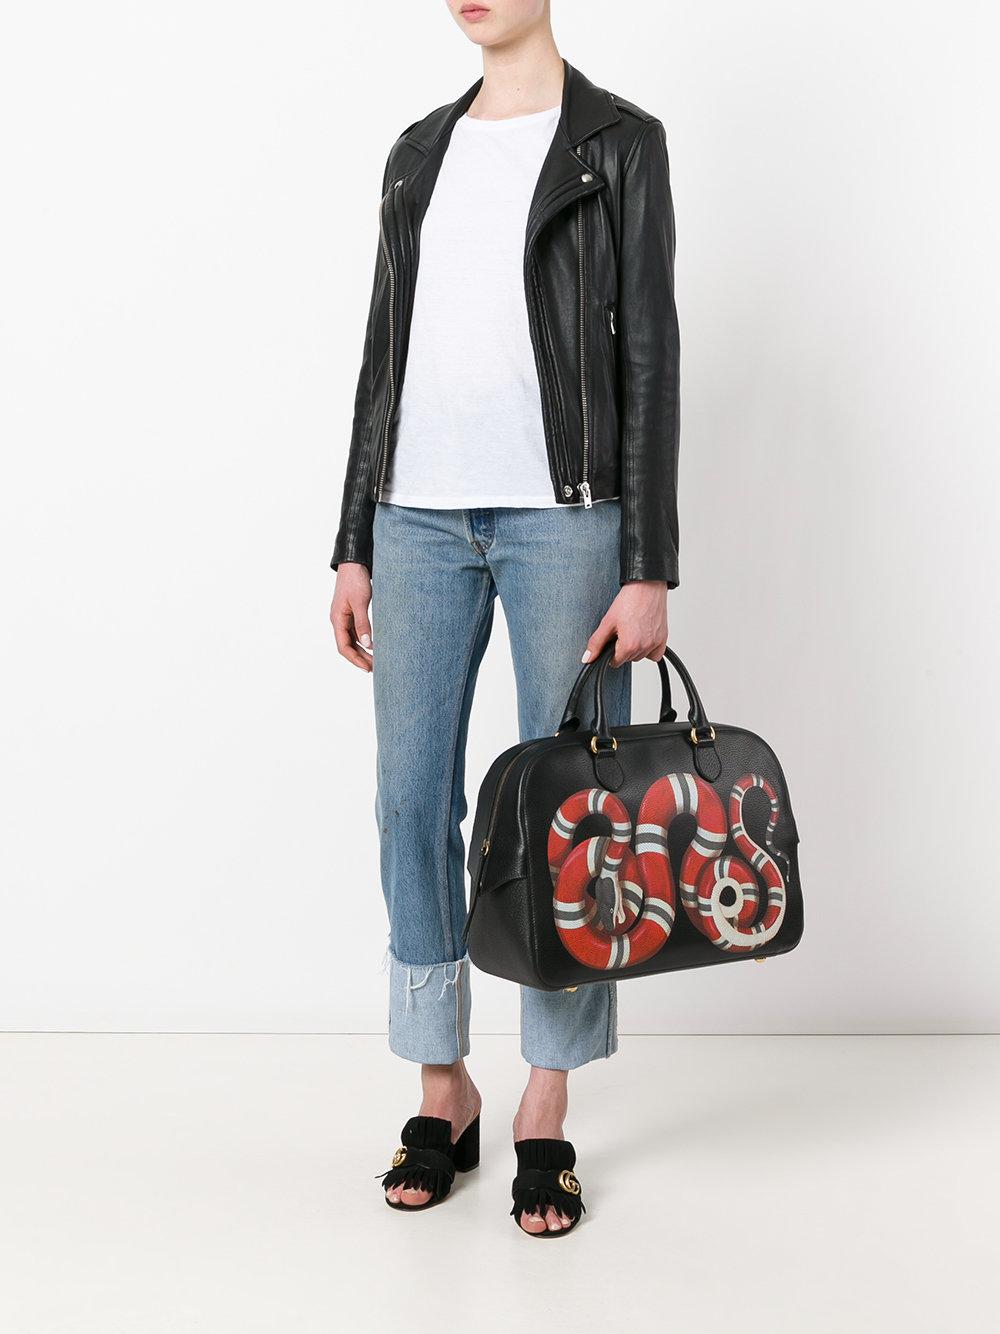 Lyst - Gucci Kingsnake Print Tote Bag in Black